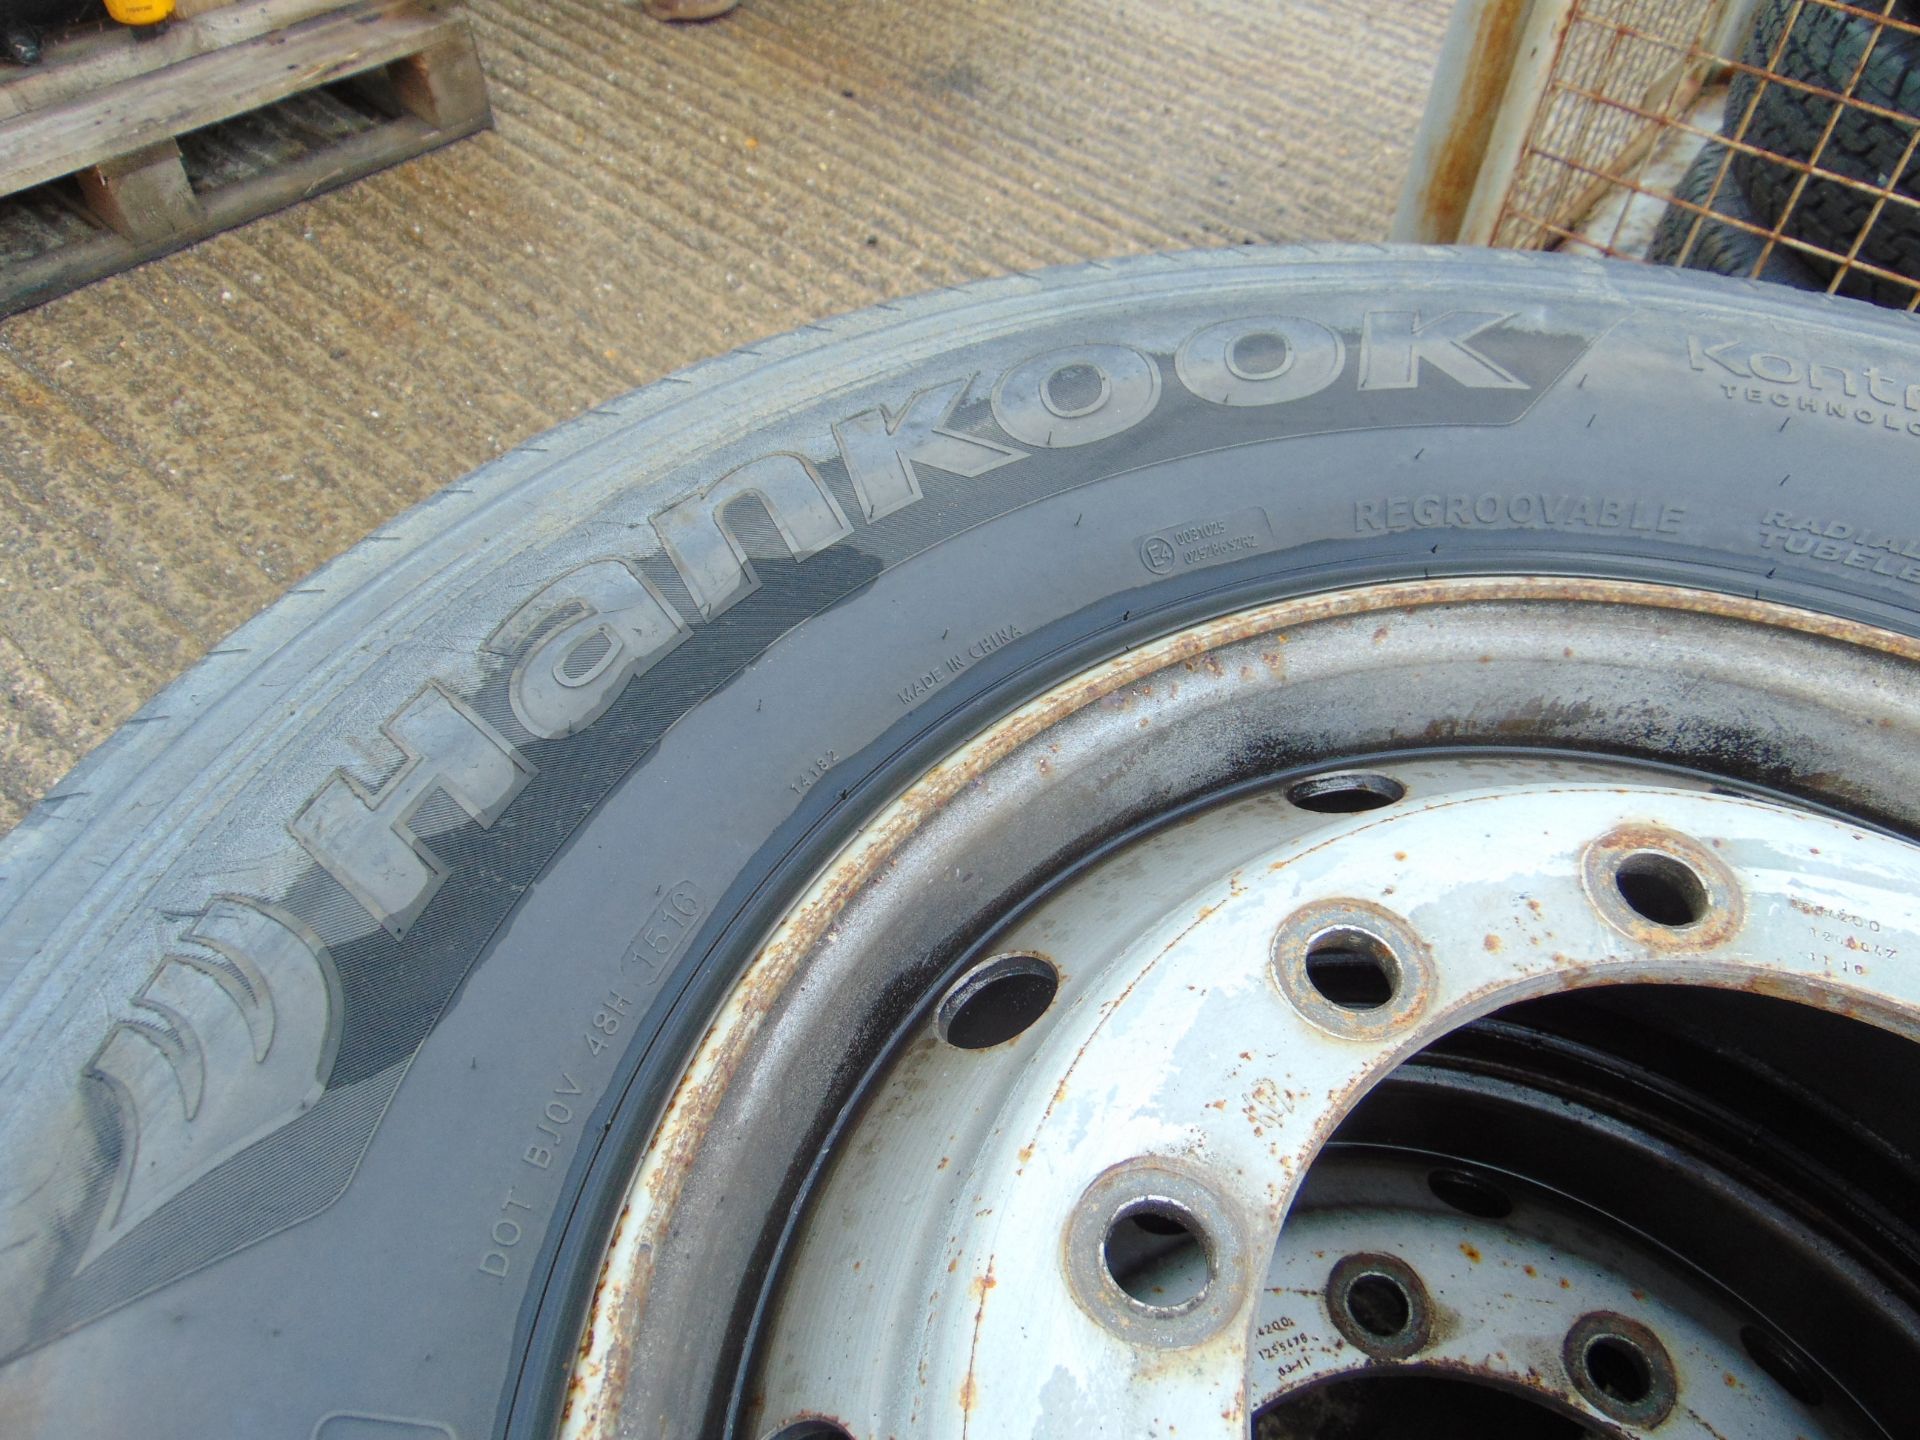 2x 295/80 R22.5 Tyres on 10 Stud Rims - Bild 4 aus 5